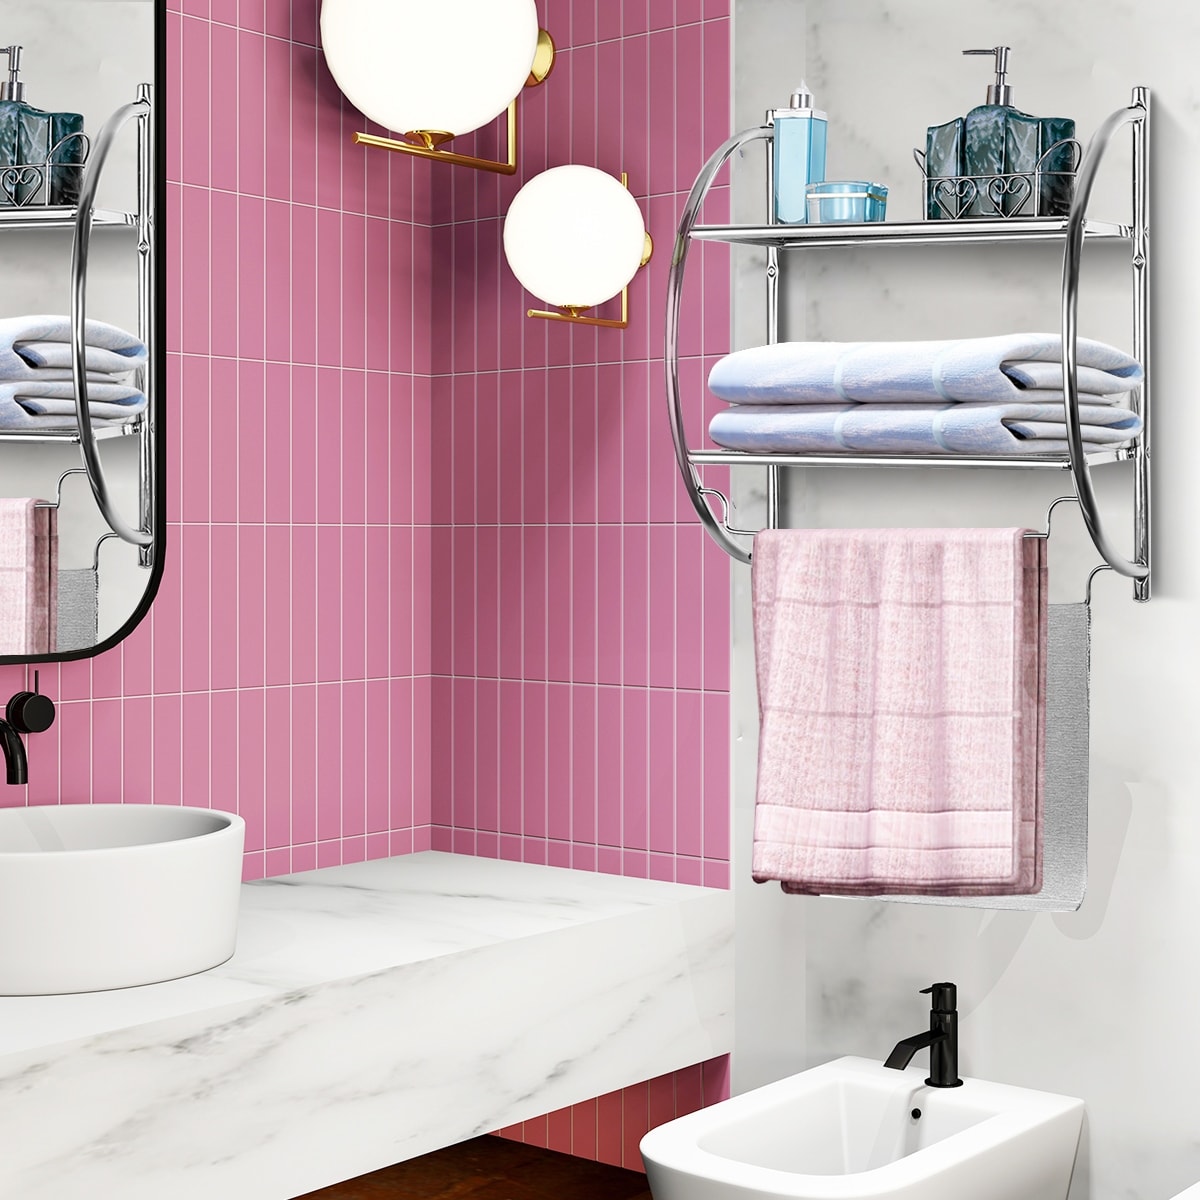 https://ak1.ostkcdn.com/images/products/is/images/direct/8878b1207c7238d72b9e1ecbcdd3765beea1d37d/Costway-2-Tier-Wall-Mount-Shower-Organizer-Toilet-Bathroom-Storage-Rack-Holder-Towel-Bar.jpg